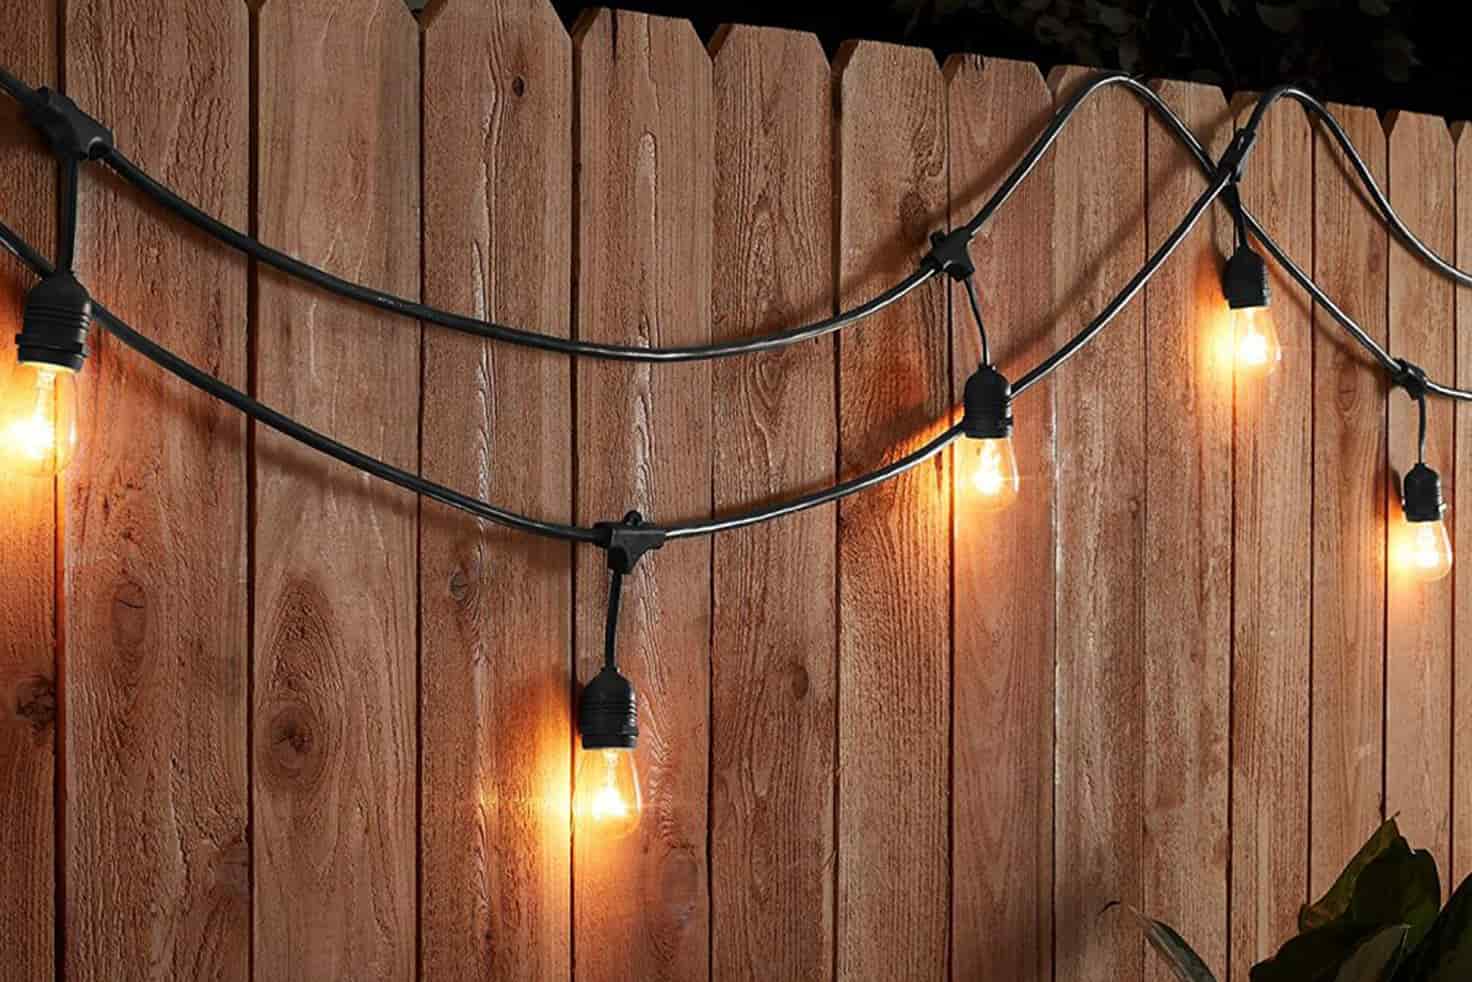 Festoon Lights hanging on wooden fence - shein home decor ideas